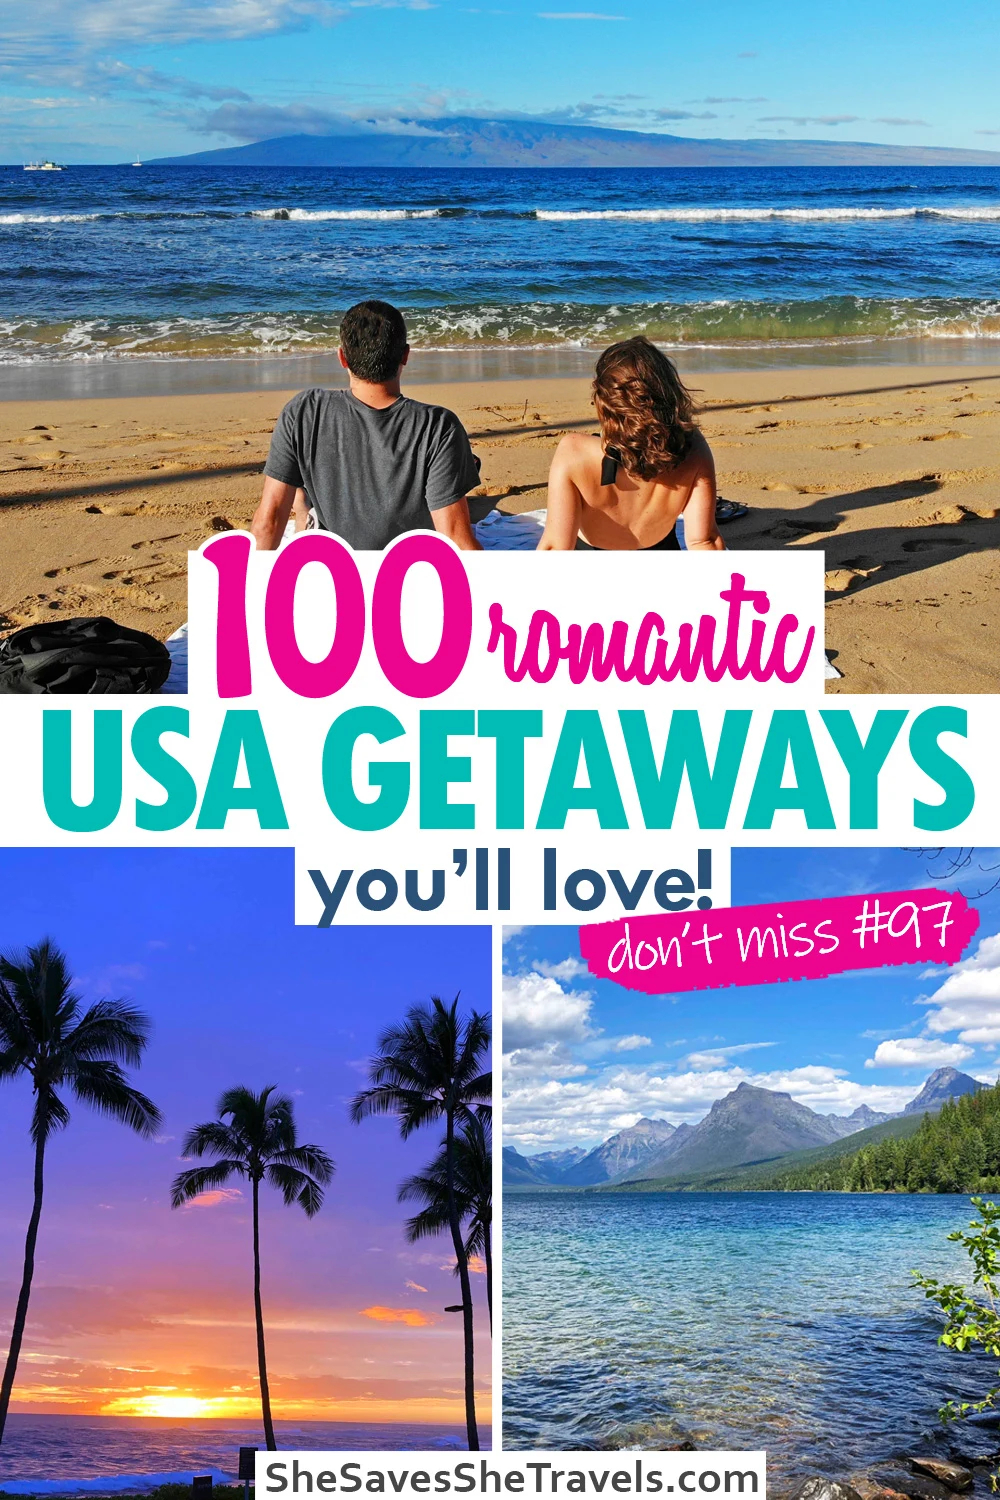 100 romantic US getaways